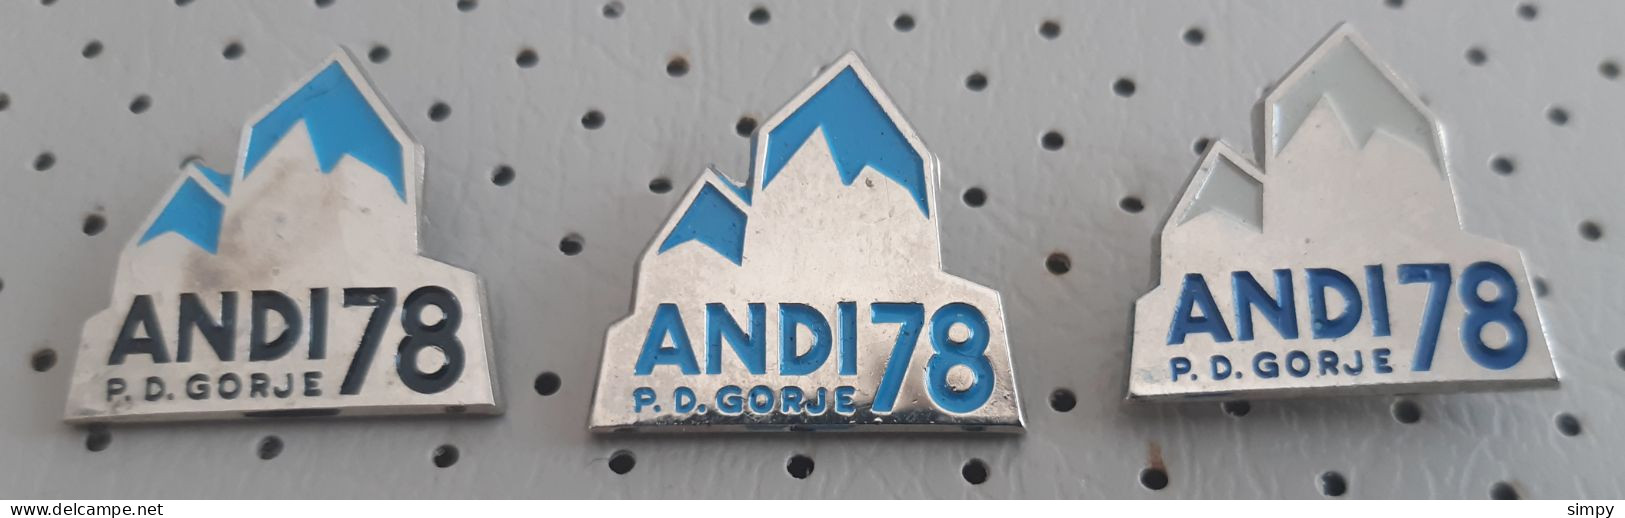 Yugoslav Expedition ANDES 1978 PD Gorje Slovenia Alpinism Mountaineering Pins - Alpinismus, Bergsteigen